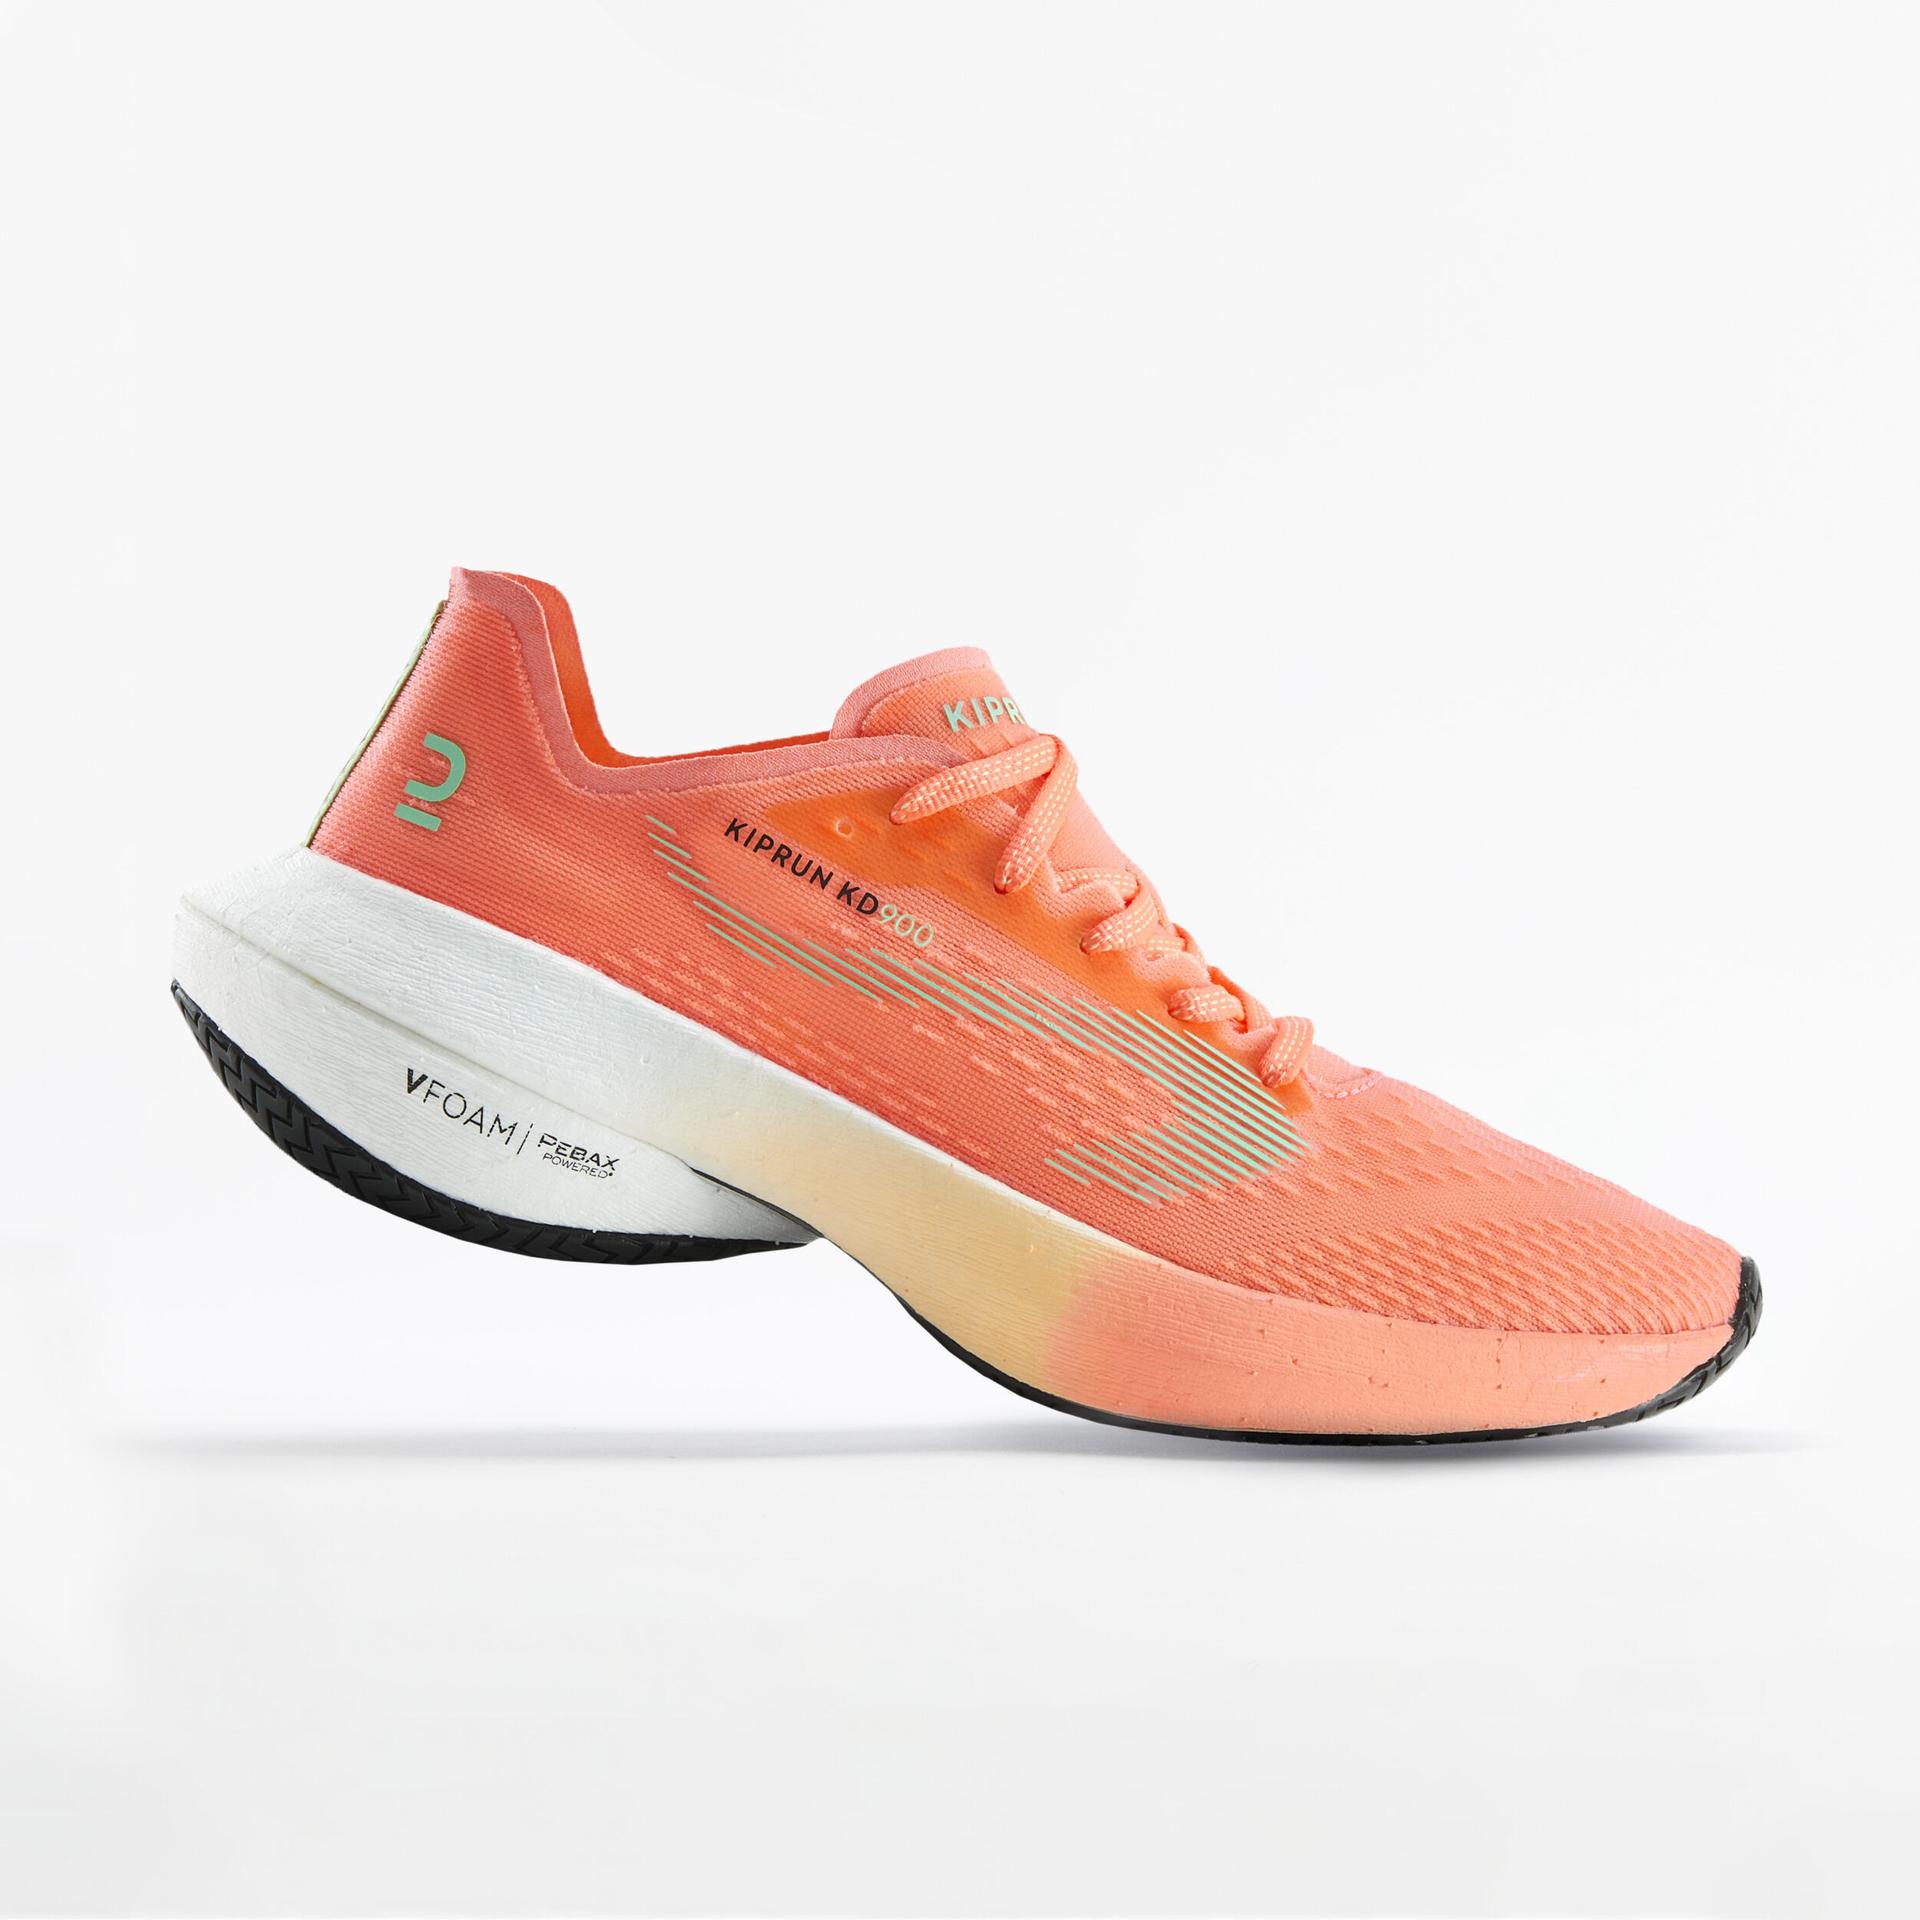 kiprun kd900 1 women's running shoes - coral